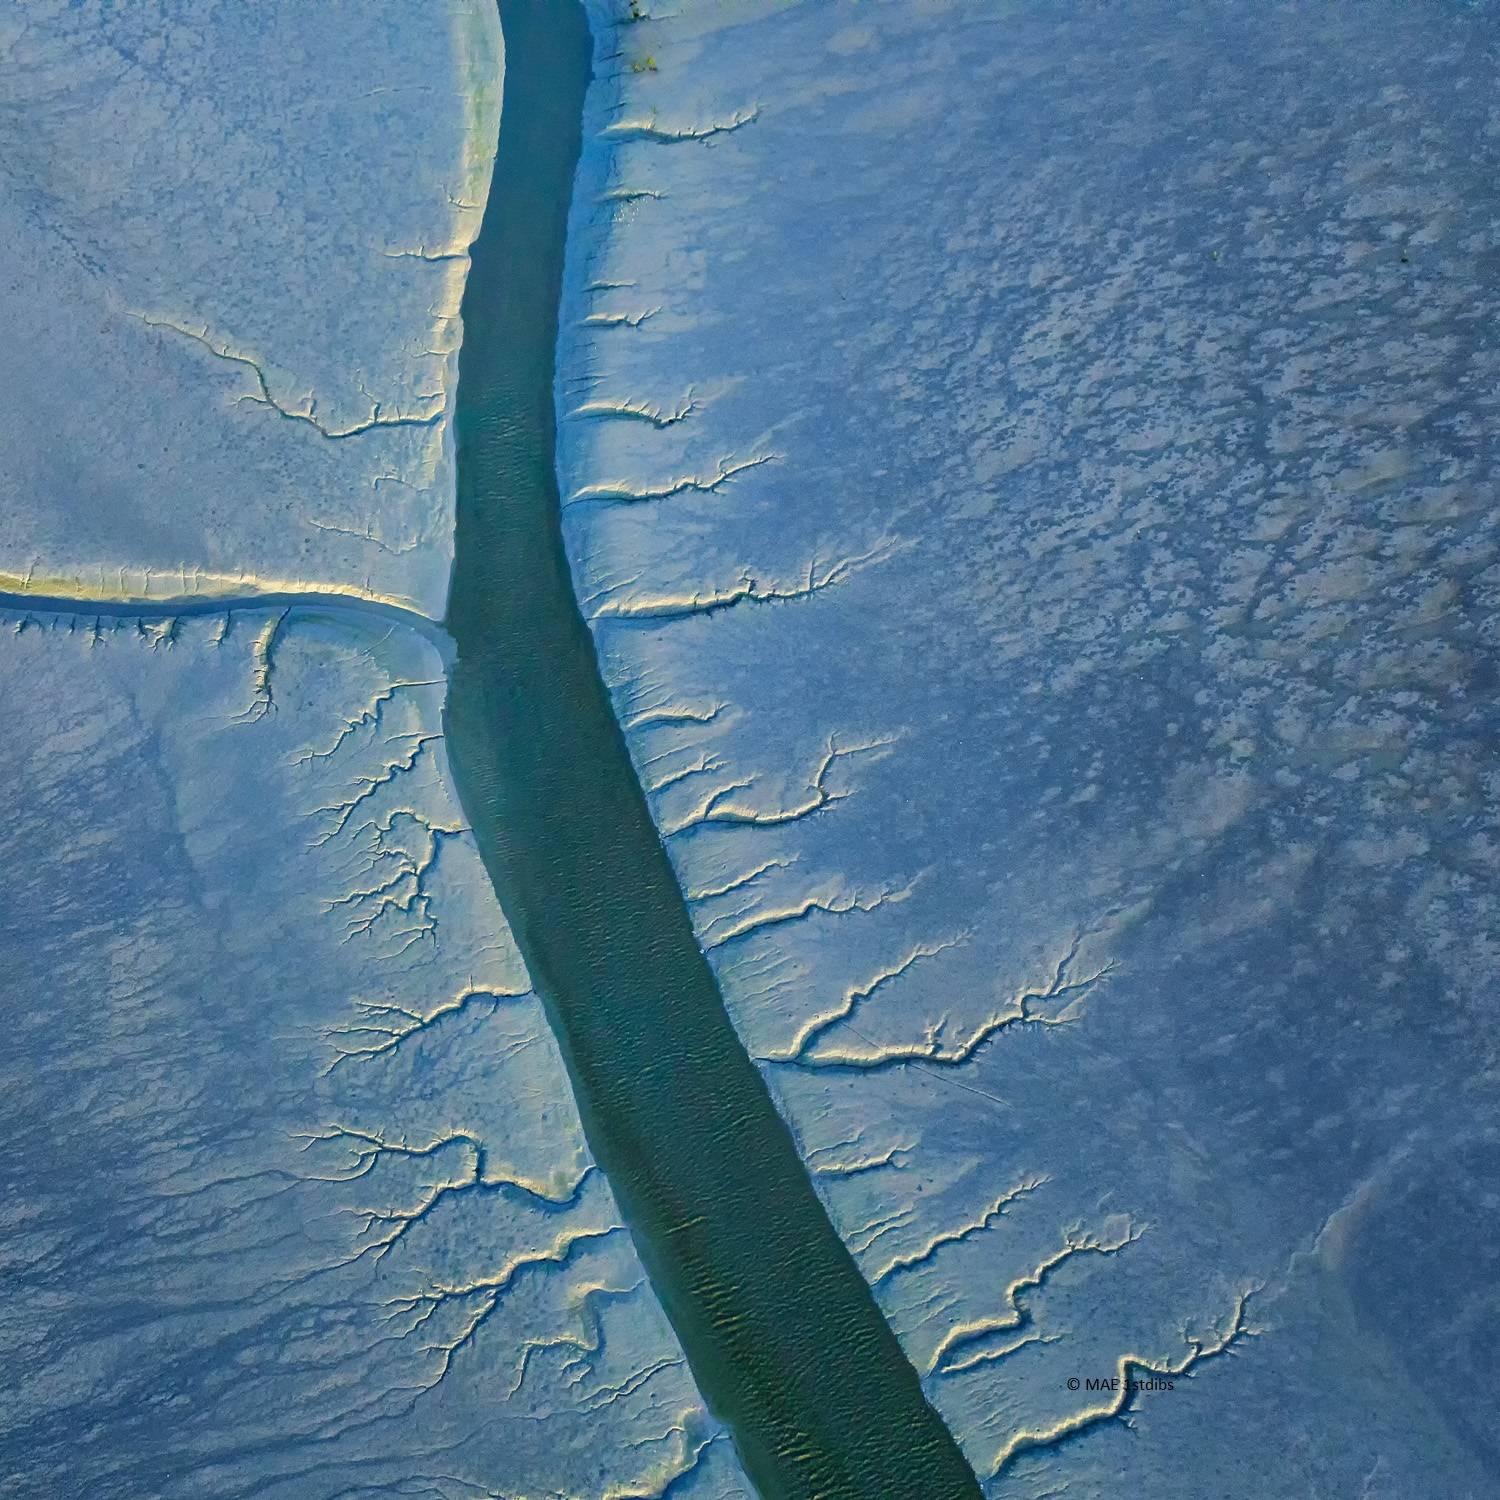 30x30in. Photographie aérienne de la terre, de la terre et de la mer -SB 04 - Bleu Landscape Photograph par MAE Curates